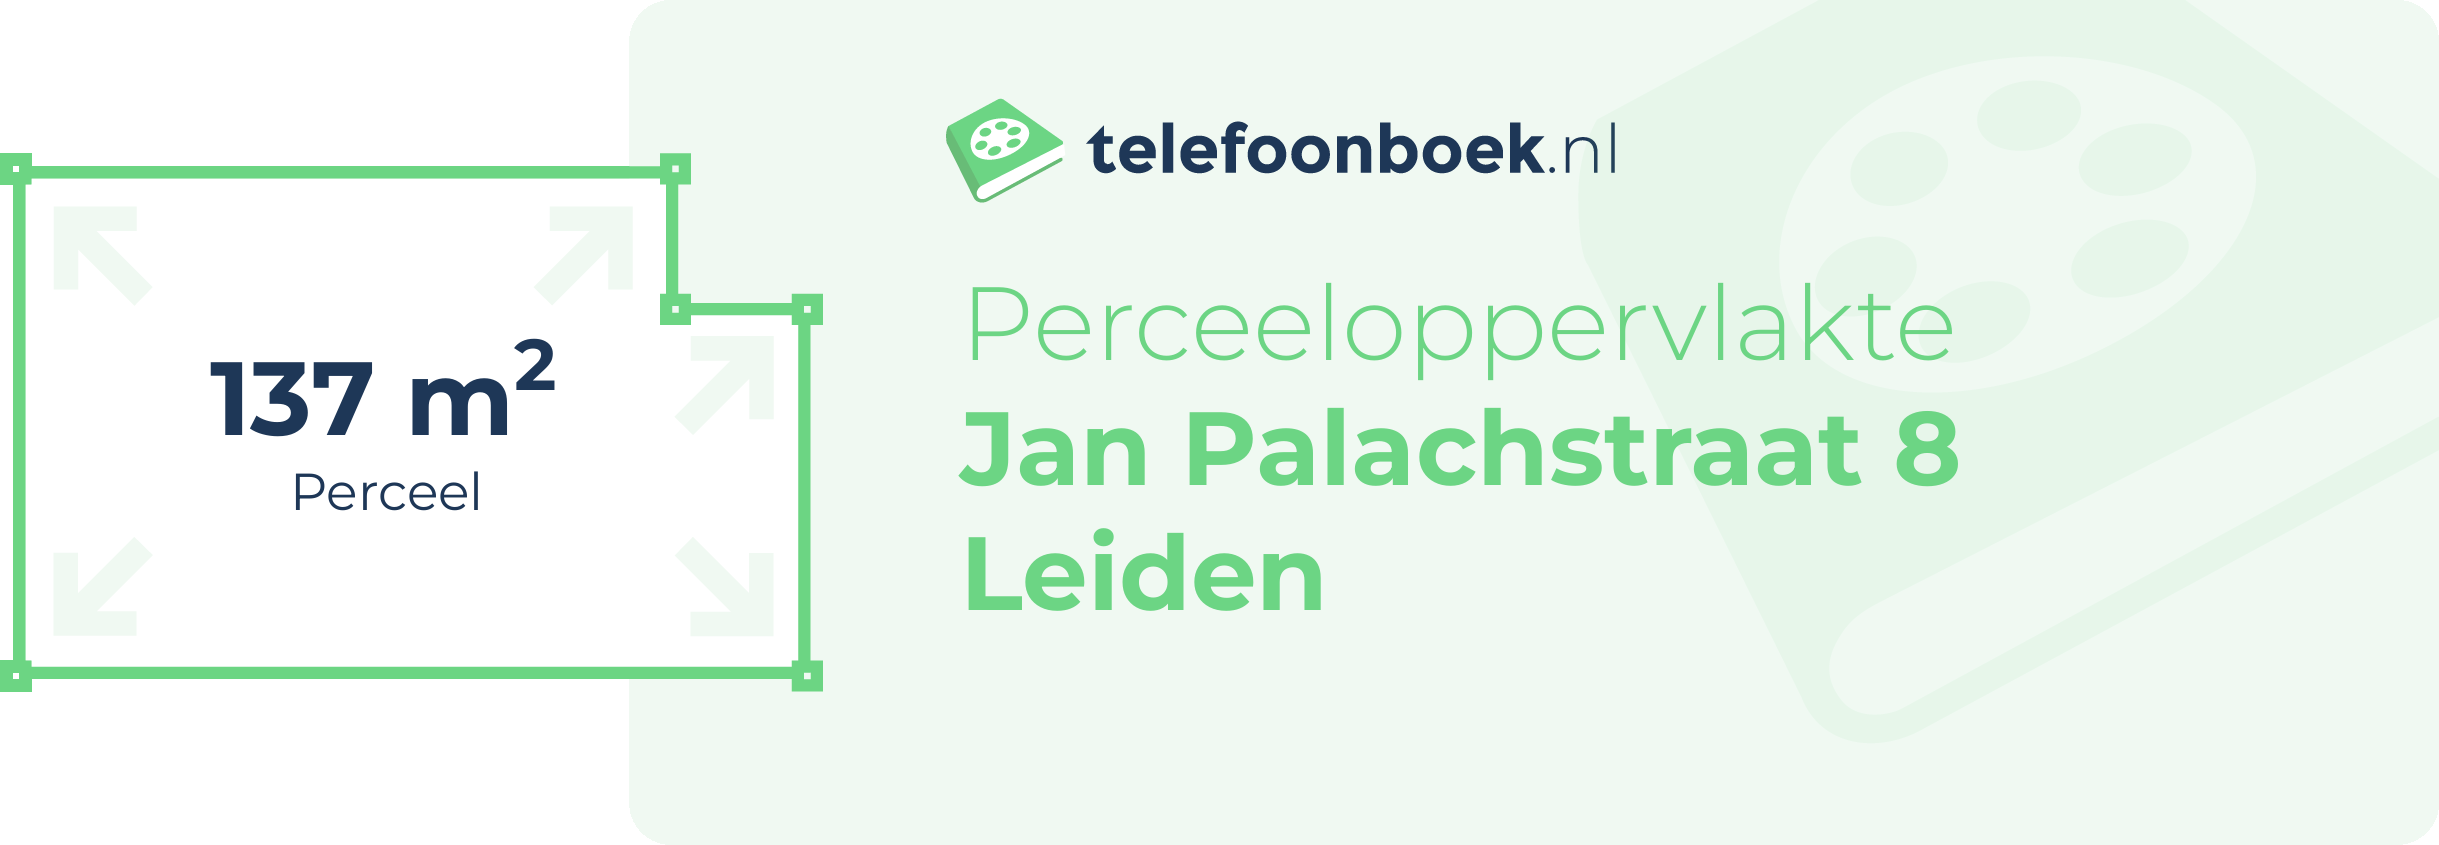 Perceeloppervlakte Jan Palachstraat 8 Leiden